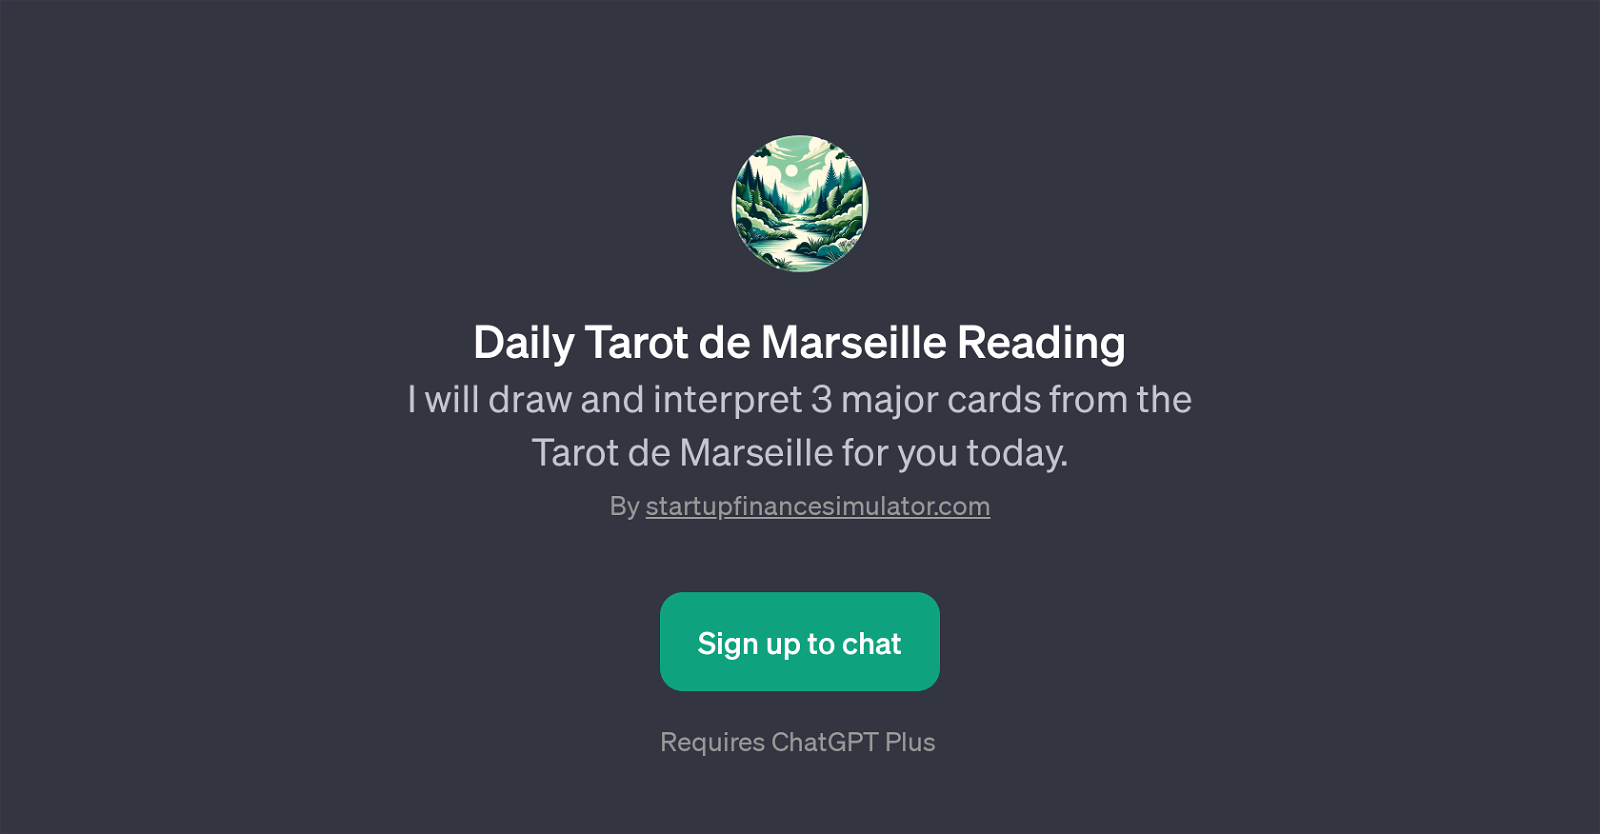 Daily Tarot de Marseille Reading website